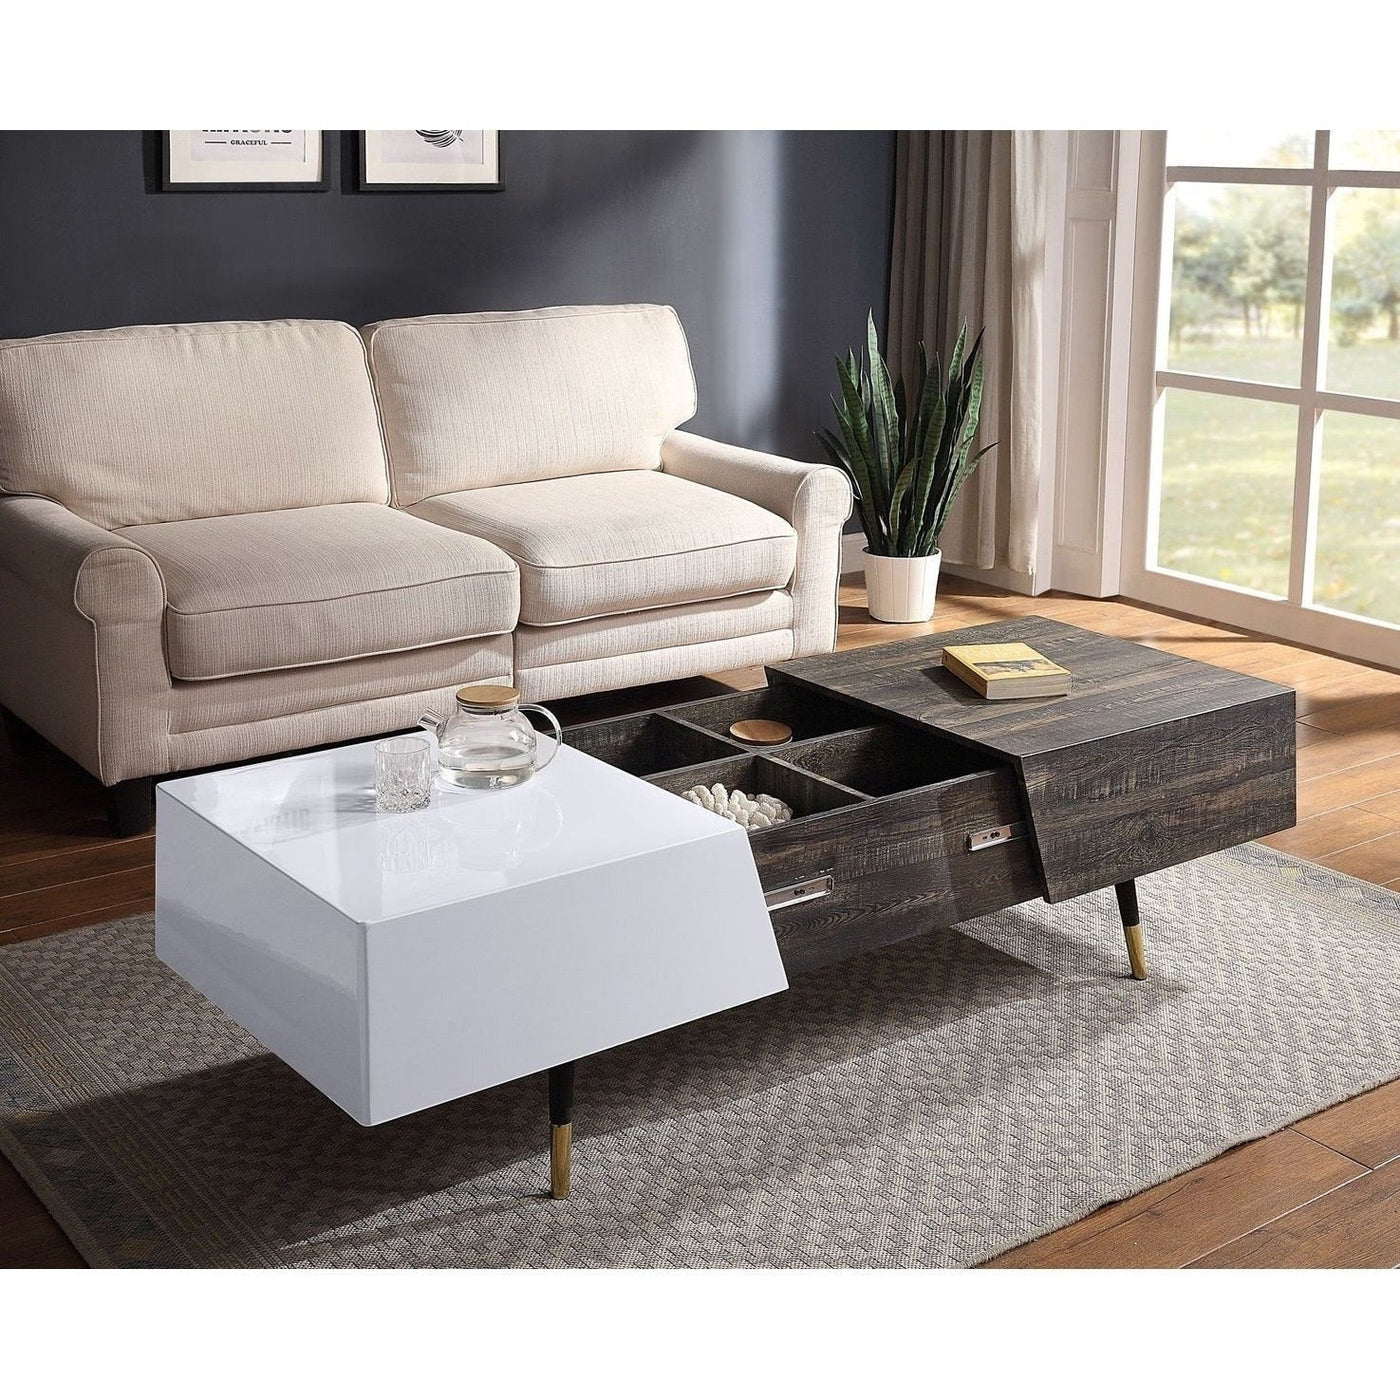 Homio Decor Living Room Mid-Century Orion Coffee Table with Storage